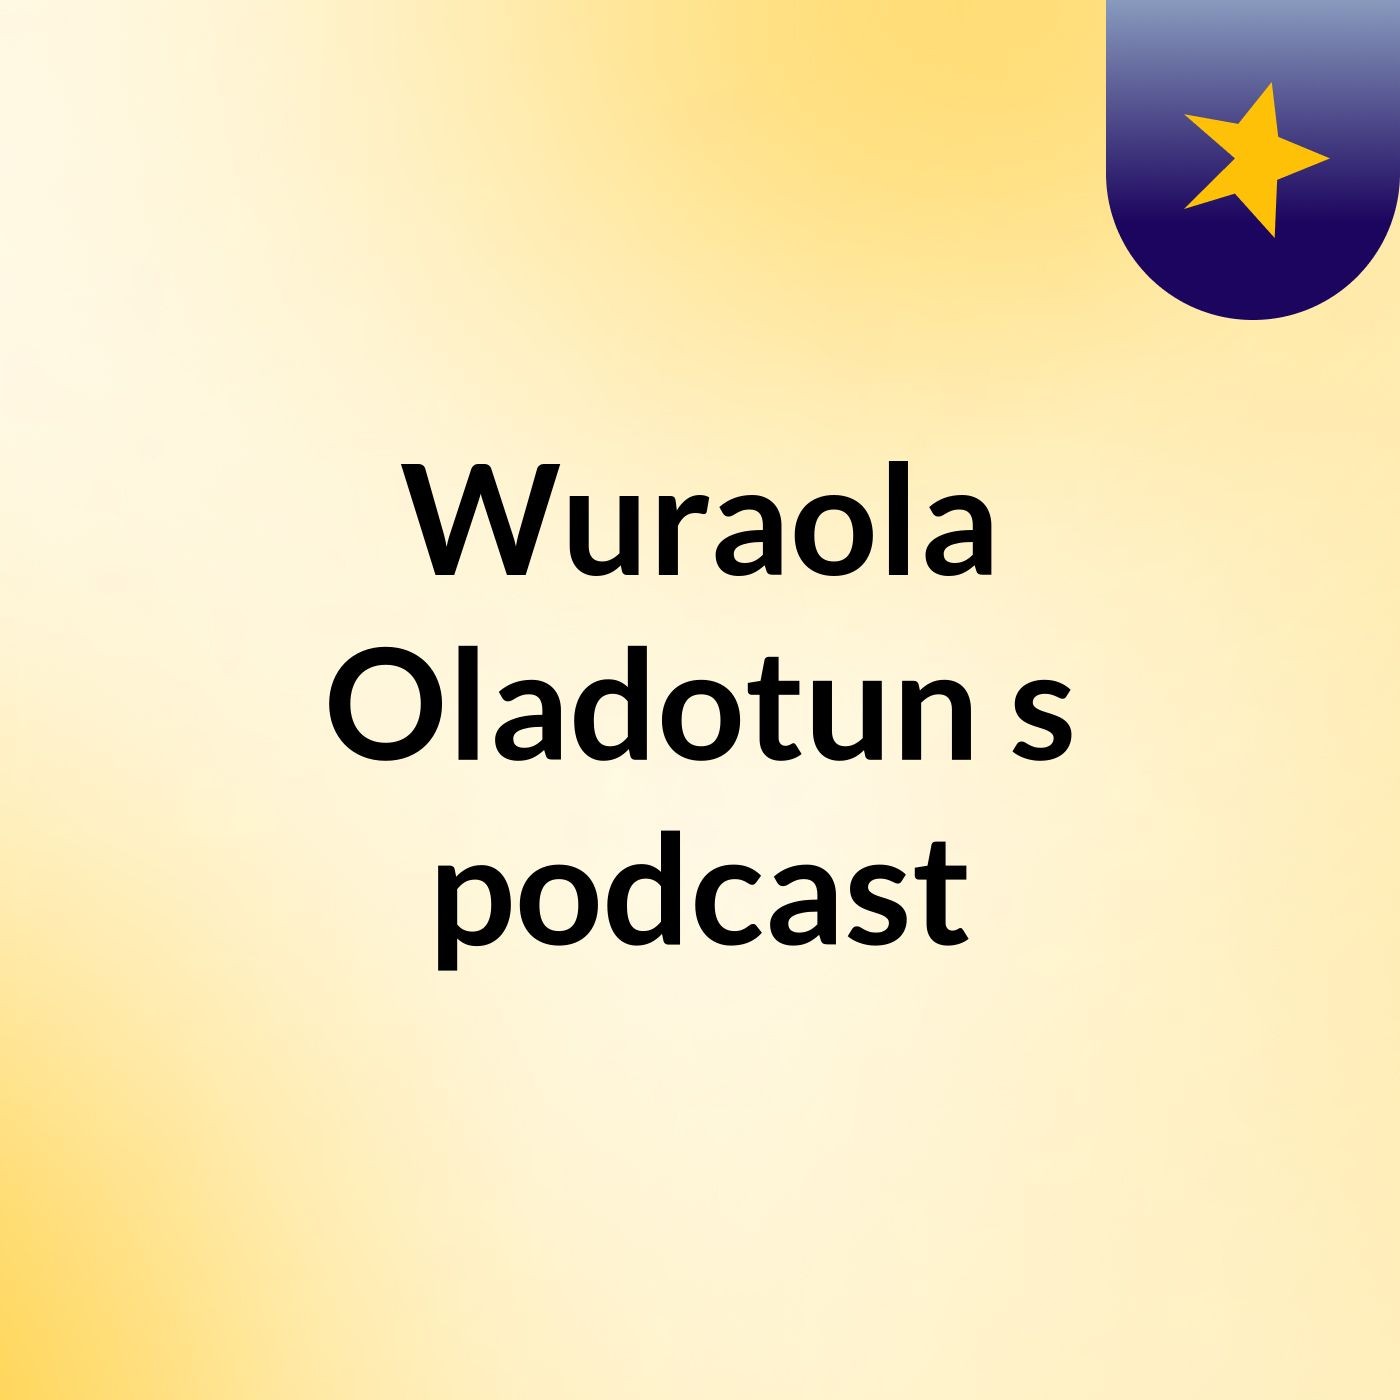 Episode 9 - Wuraola Oladotun's podcast